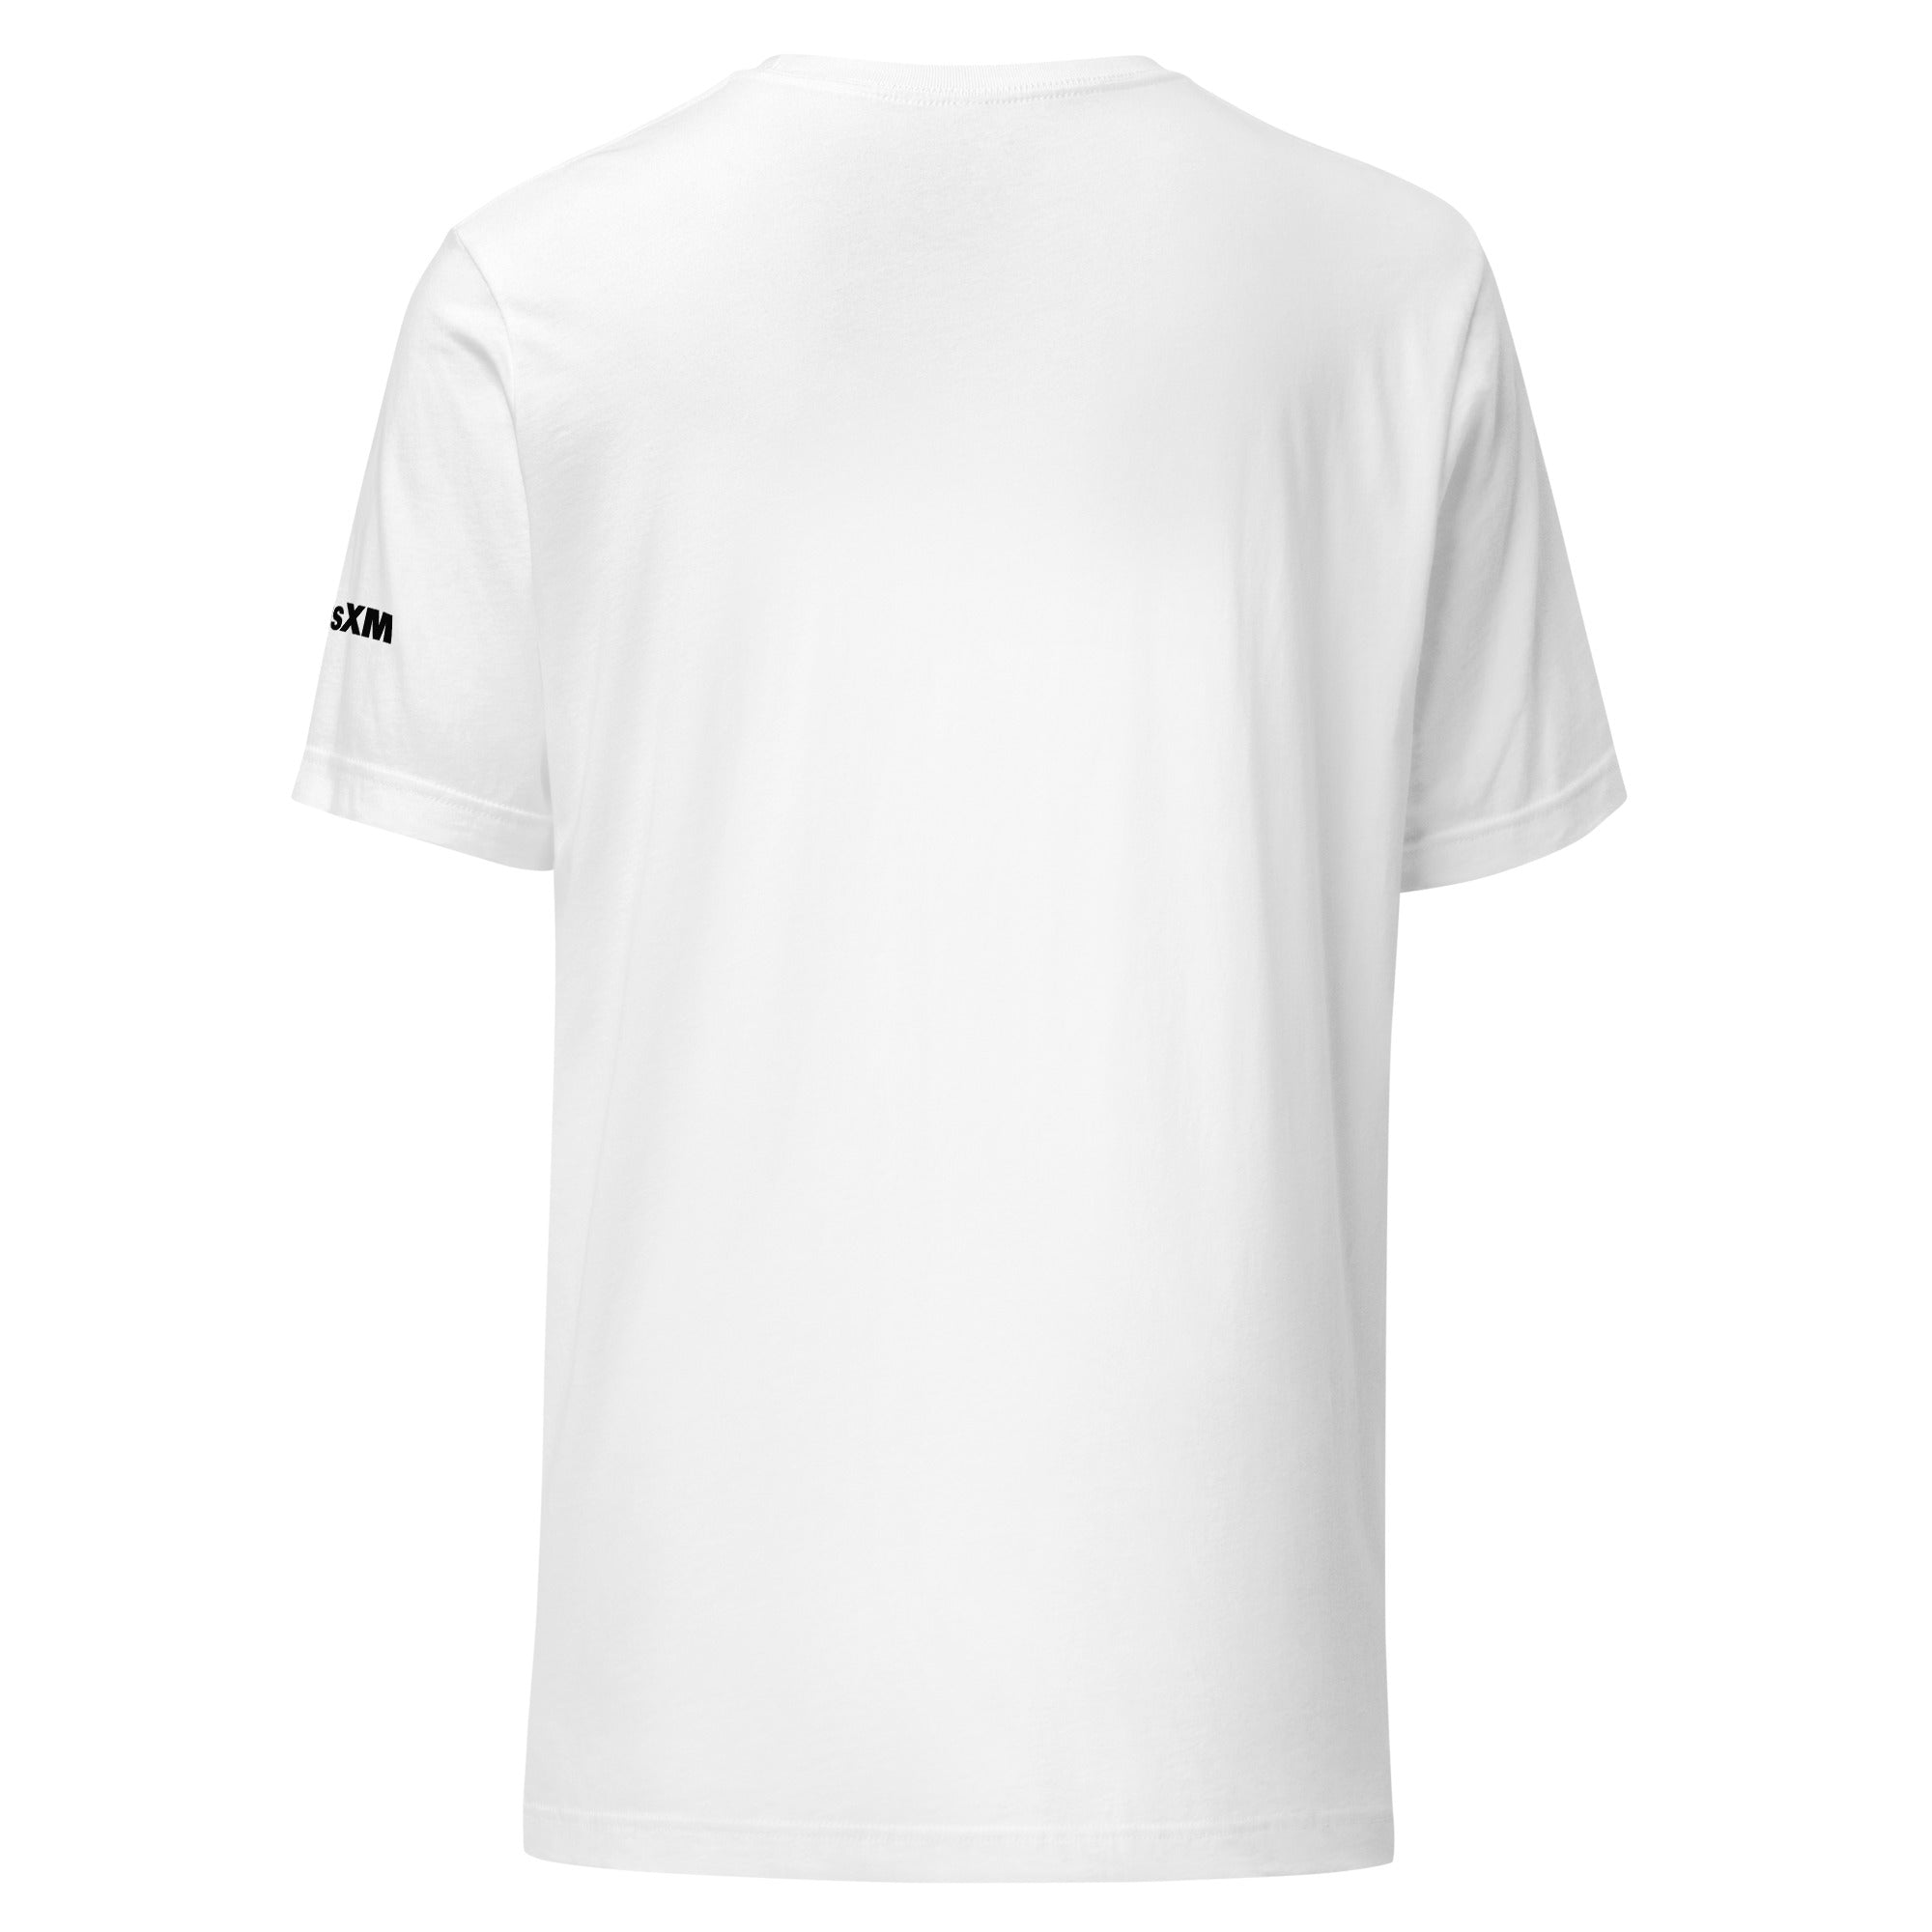 Mental Health Radio: T-shirt (White)